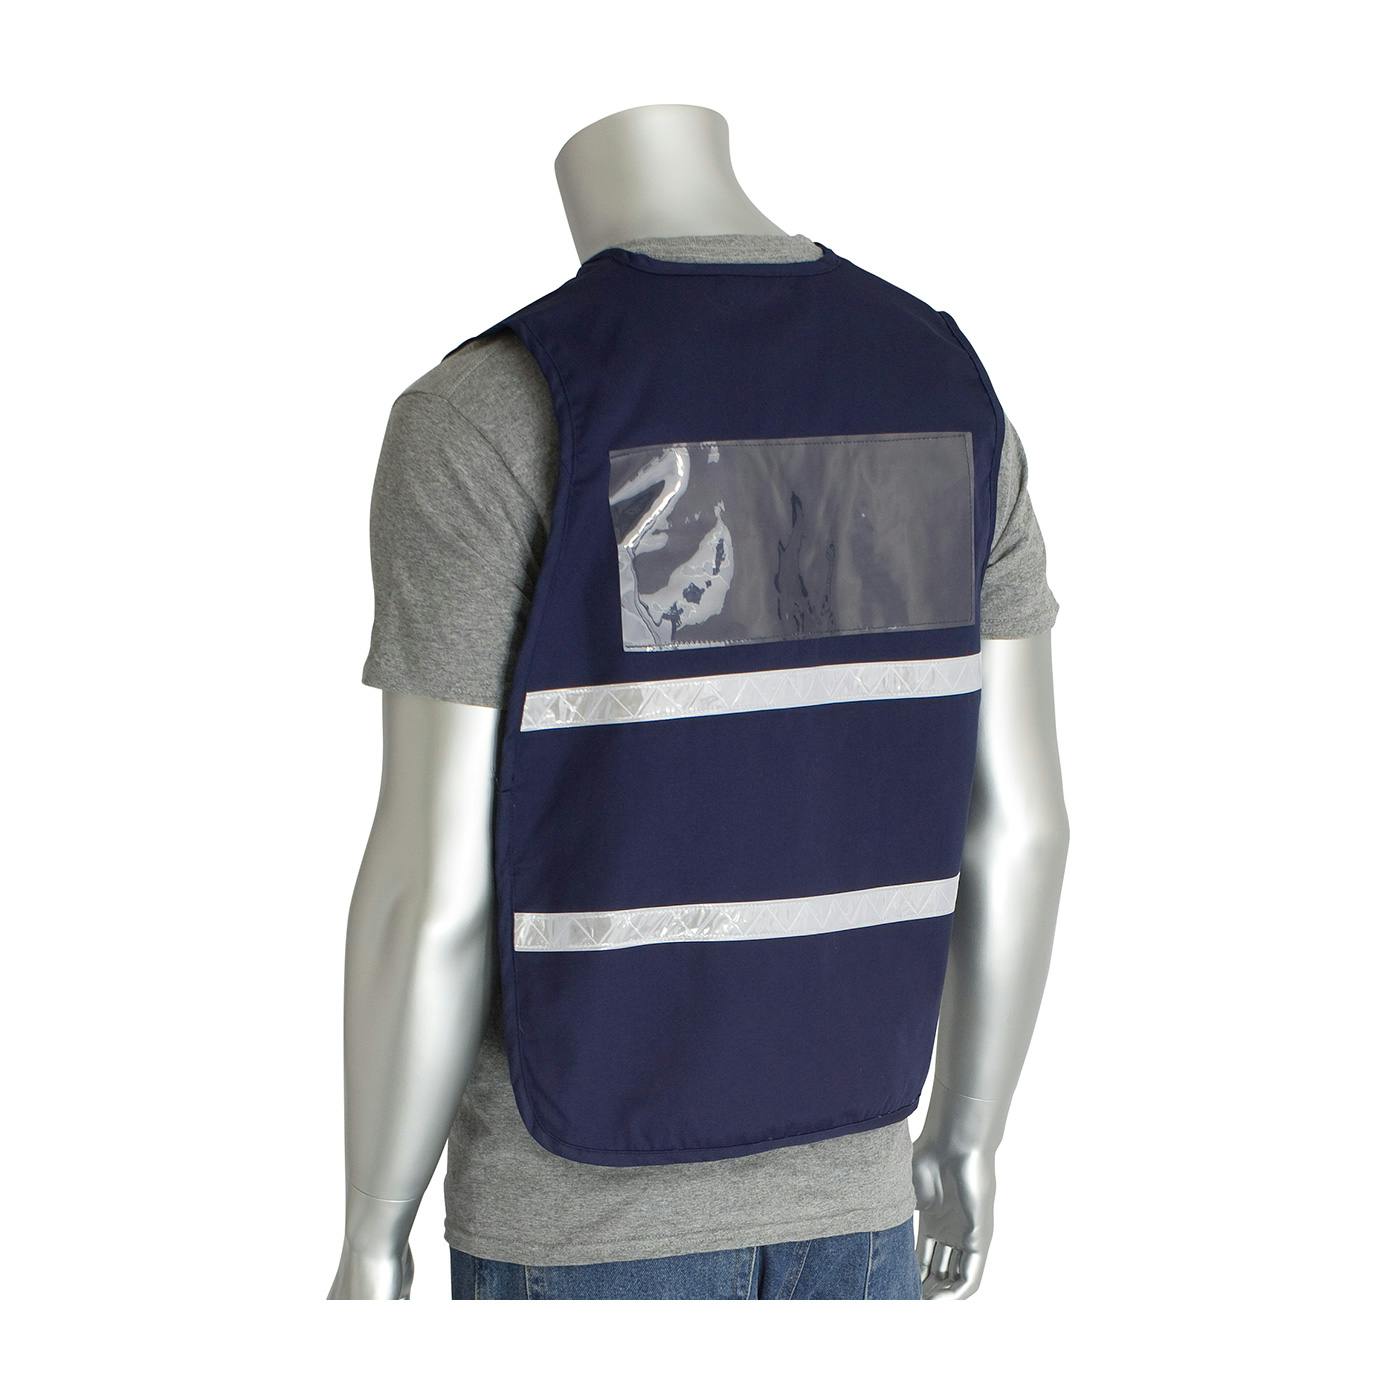 Non-ANSI Incident Command Vest - Cotton/Polyester Blend, Blue (300-2503)